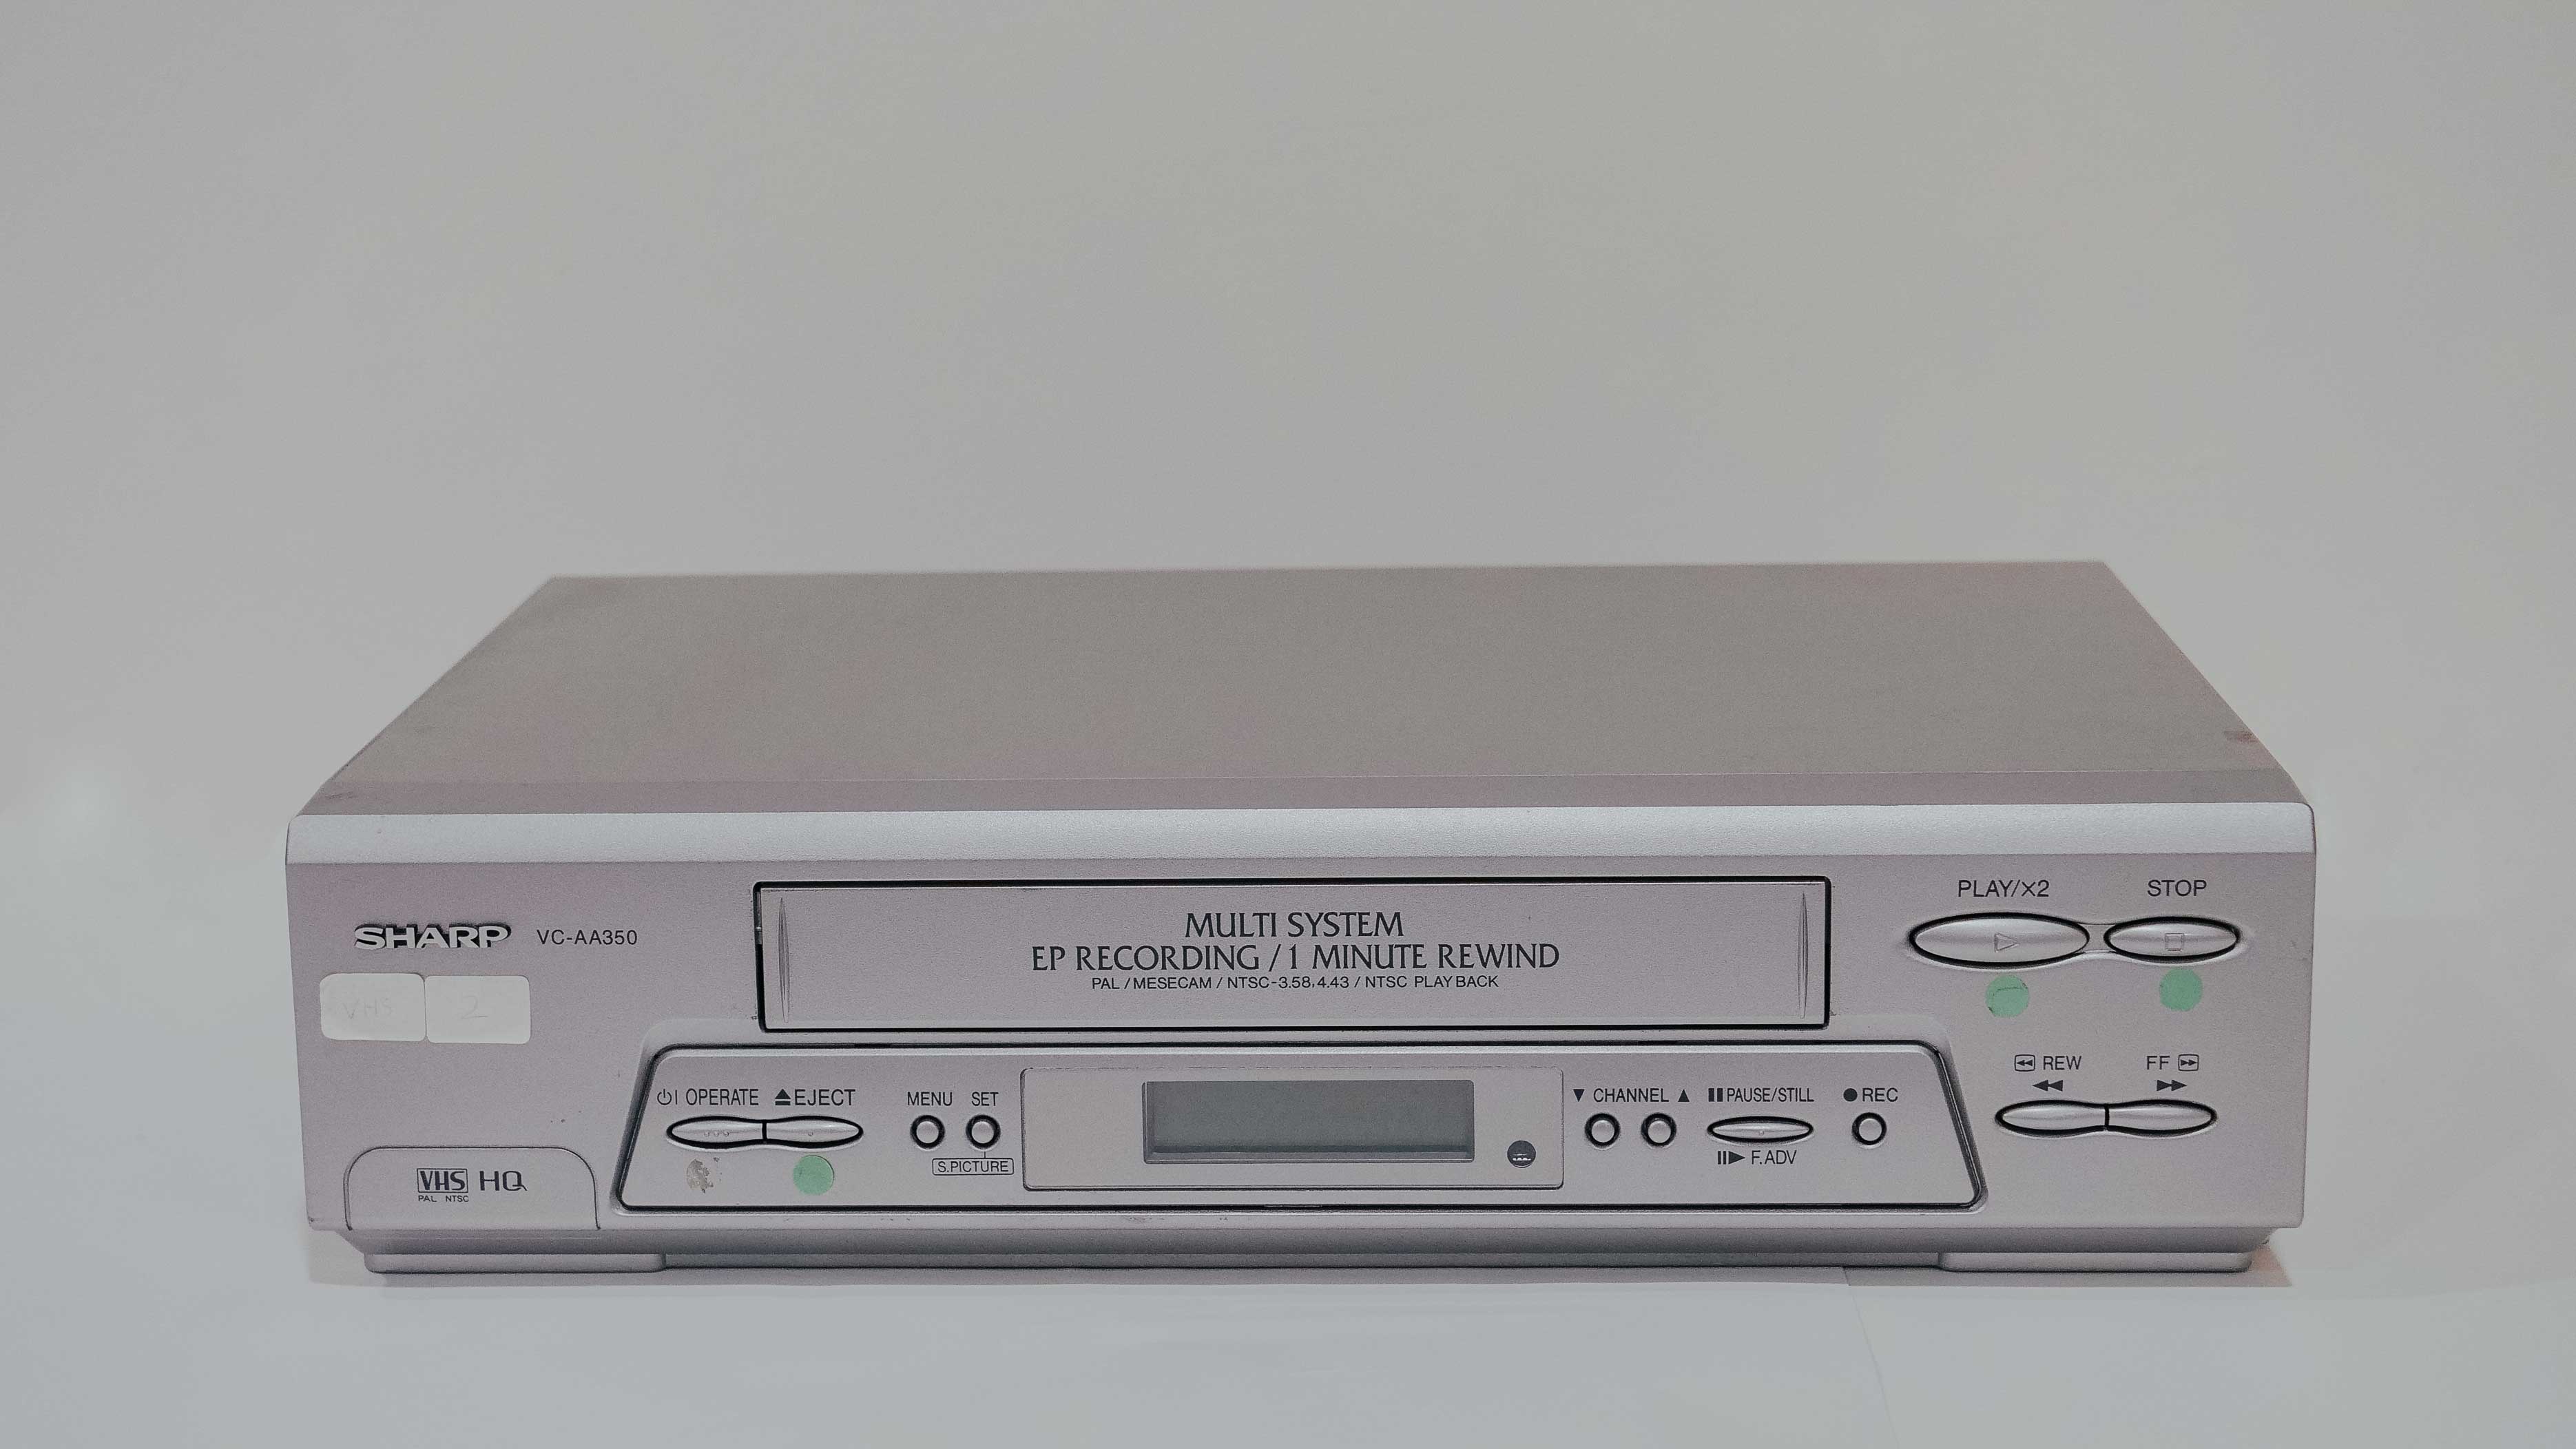 Videocassette recorder (VCR) - Sharp VC-AA350 Video Cassette Recorder.